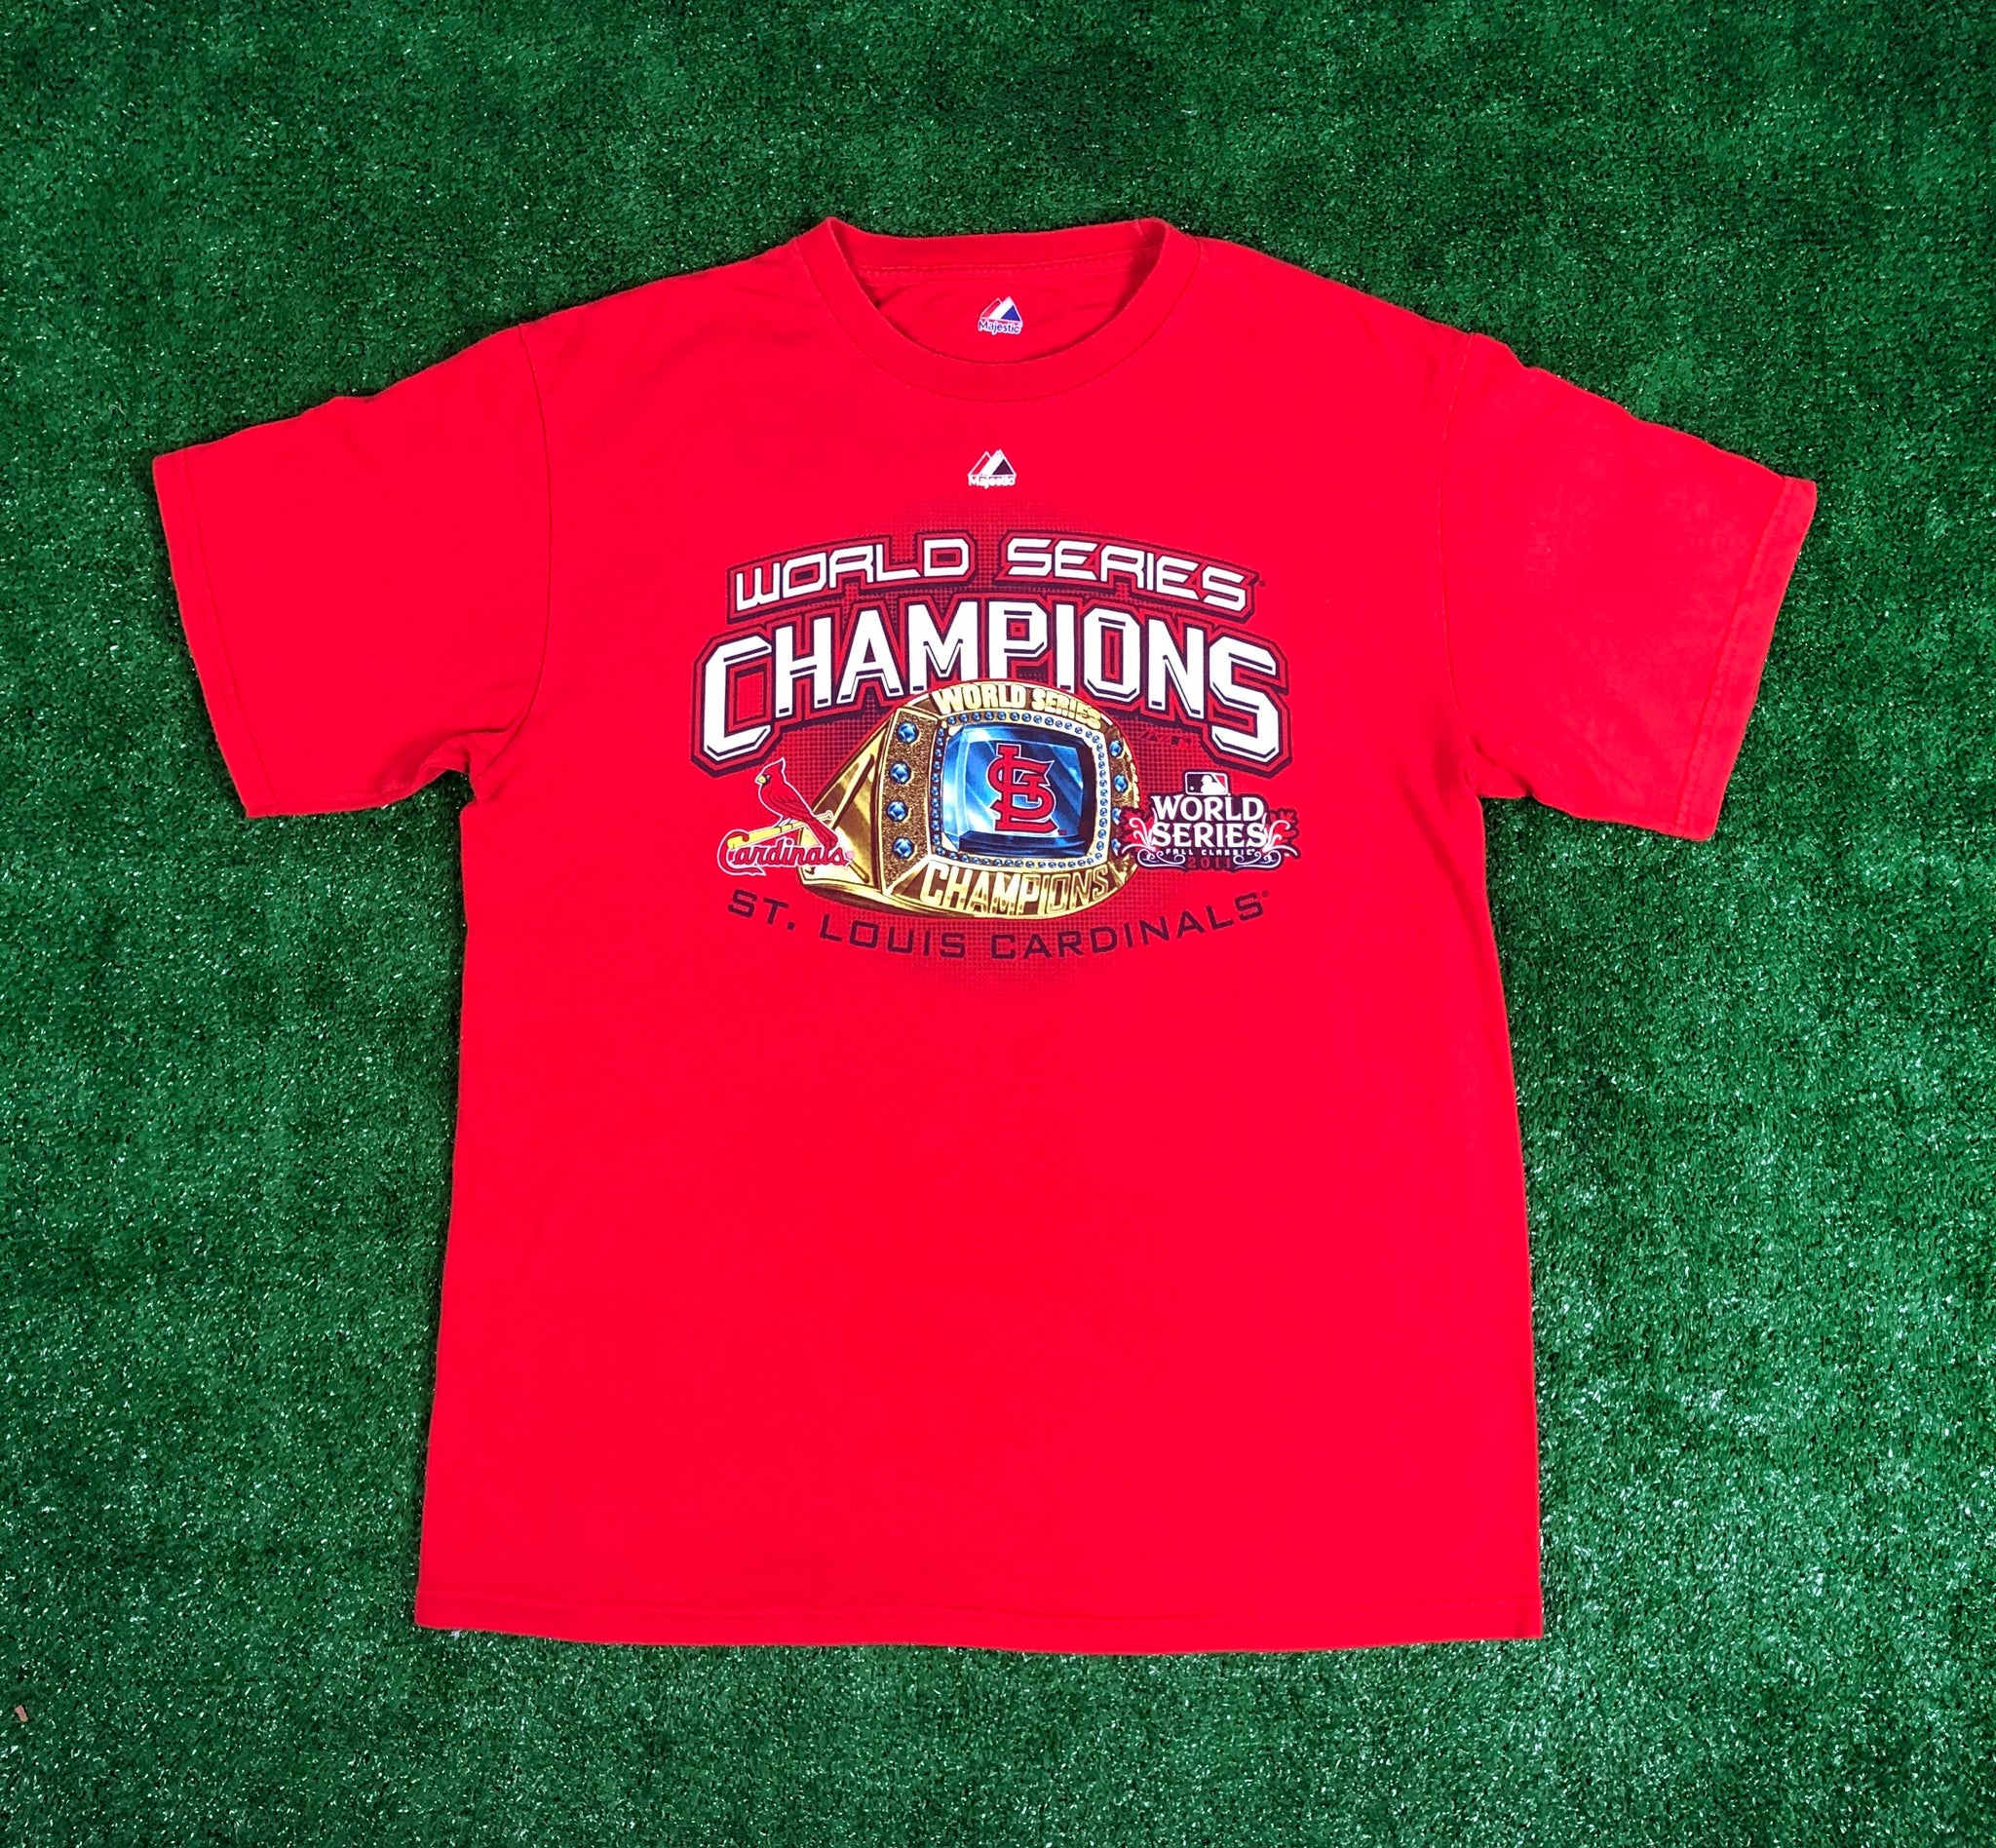 St. Louis Cardinals 2011 World Series Champions Merchandise